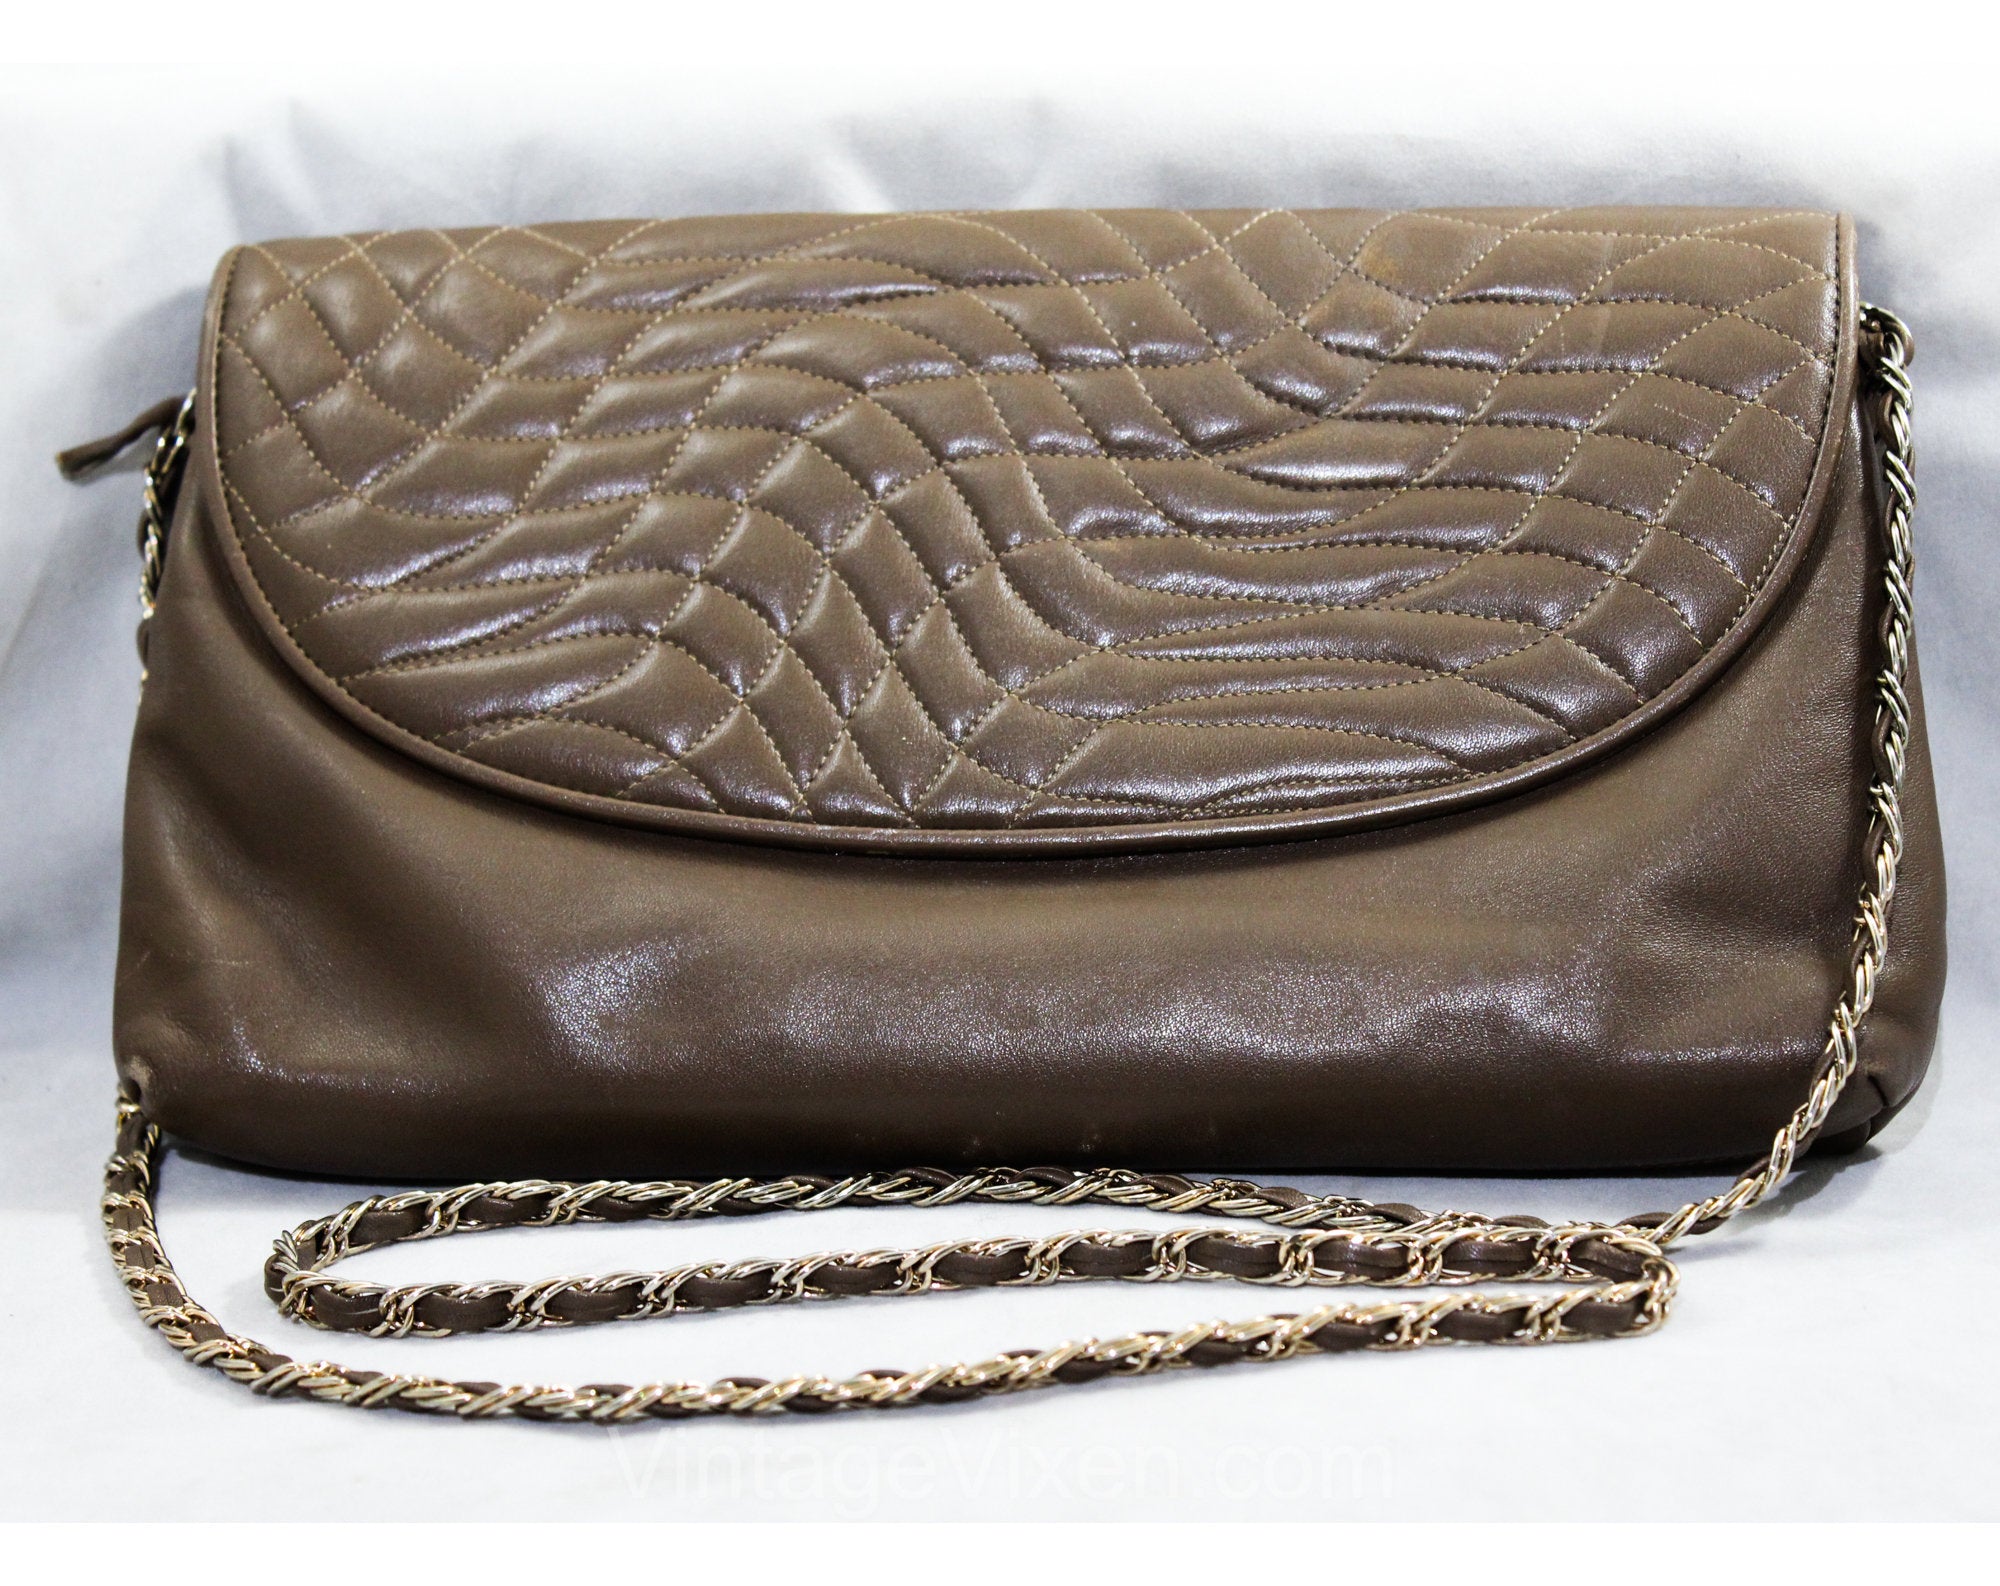 Pierre Cardin Croc Leather Handbag c.1970s | Louise | Flickr